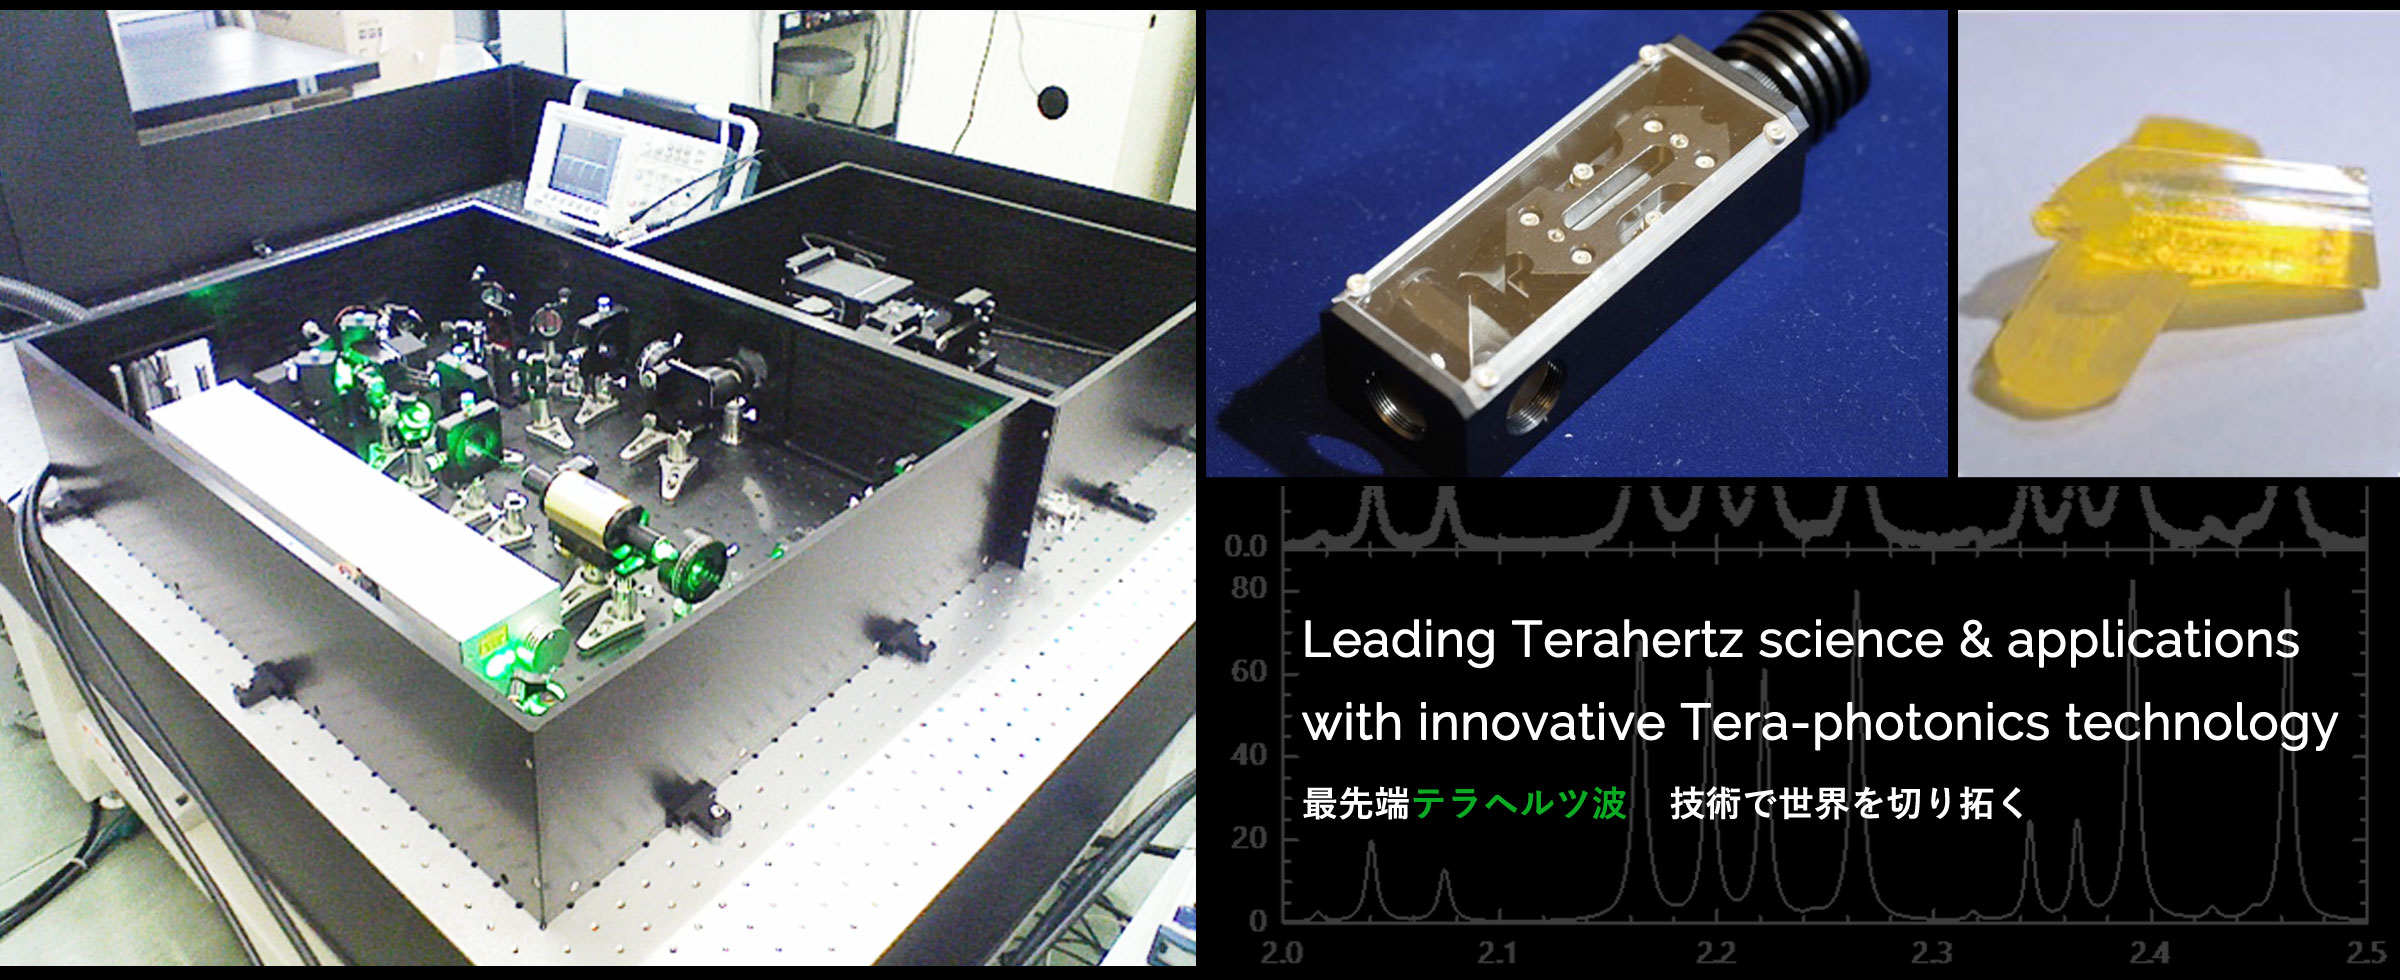 Leading Terahertz science & applications with innovative Tera-photonics technology